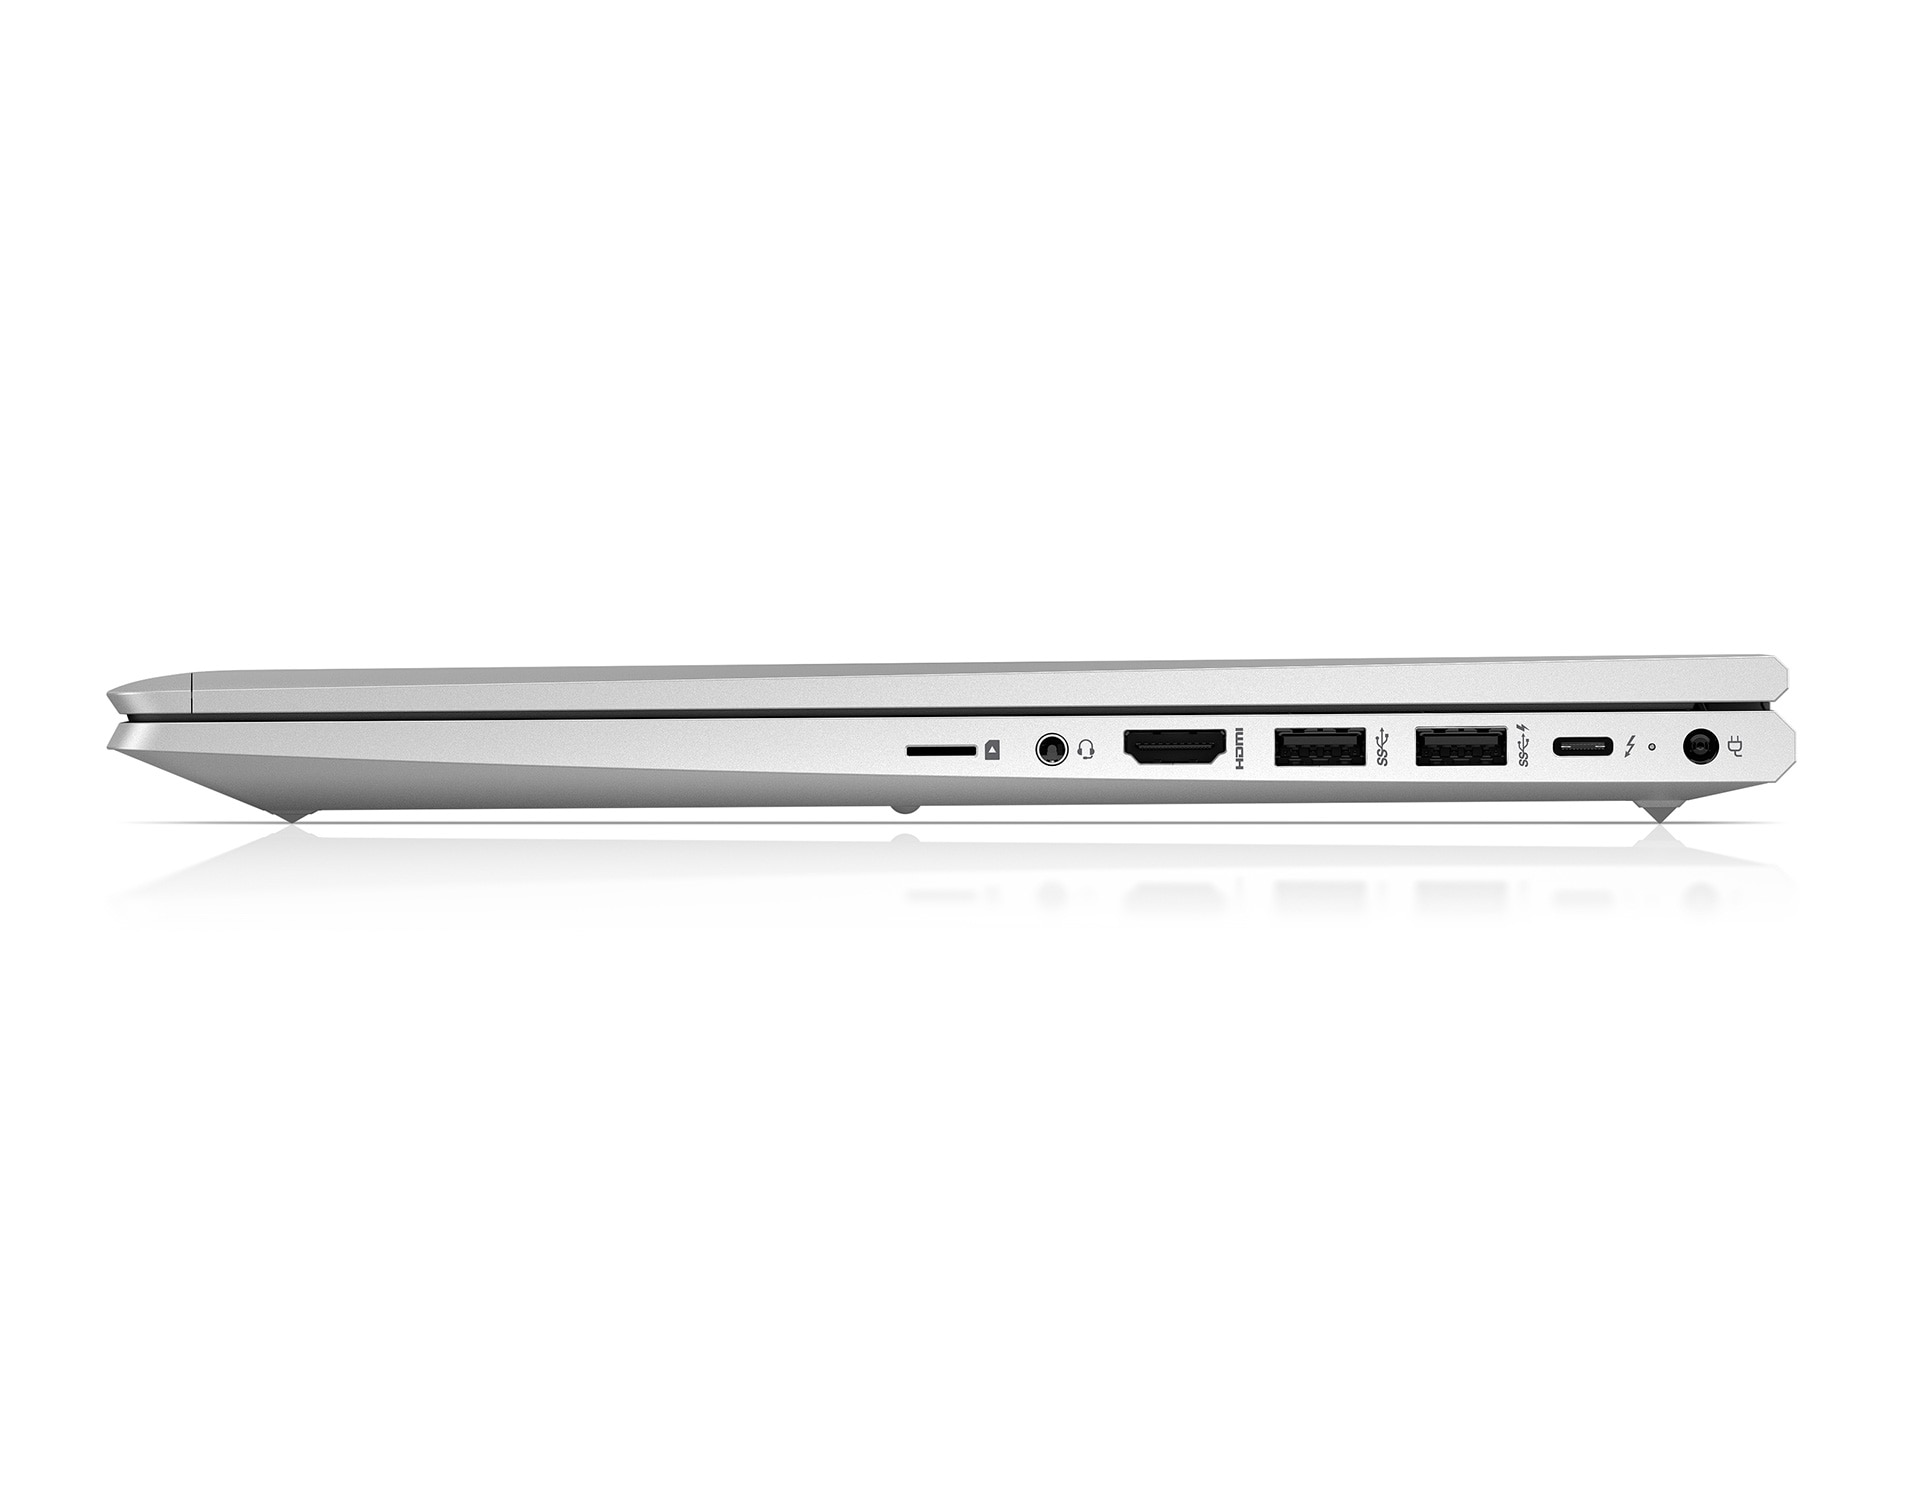 定形外発送送料無料商品 HP ProBook 650 G1/i7-4700/8G/SSD275/フルHD